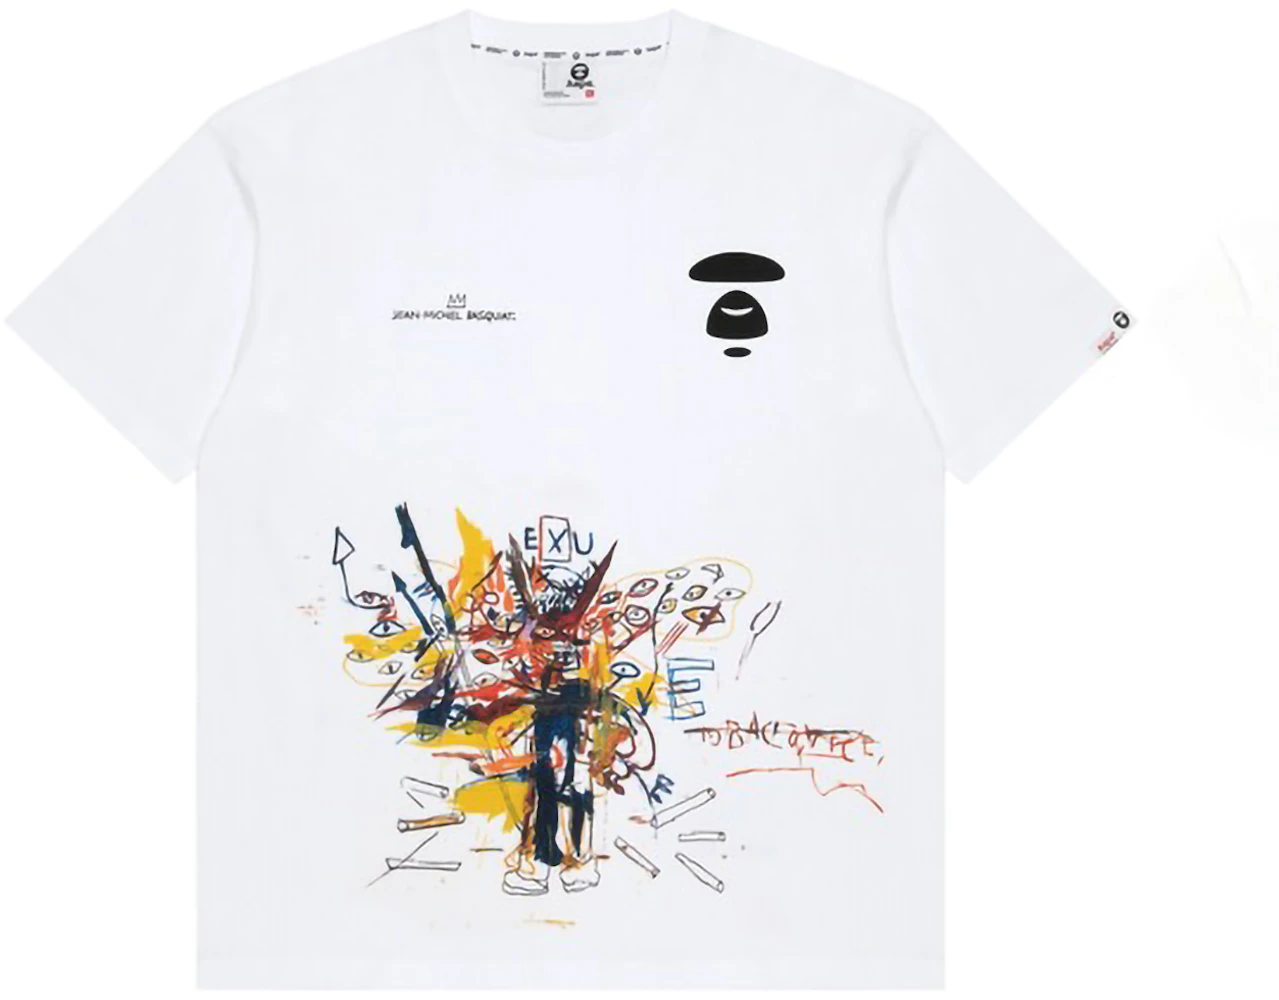 Bravest Studios Jean Michel Basquiat Shorts Orange